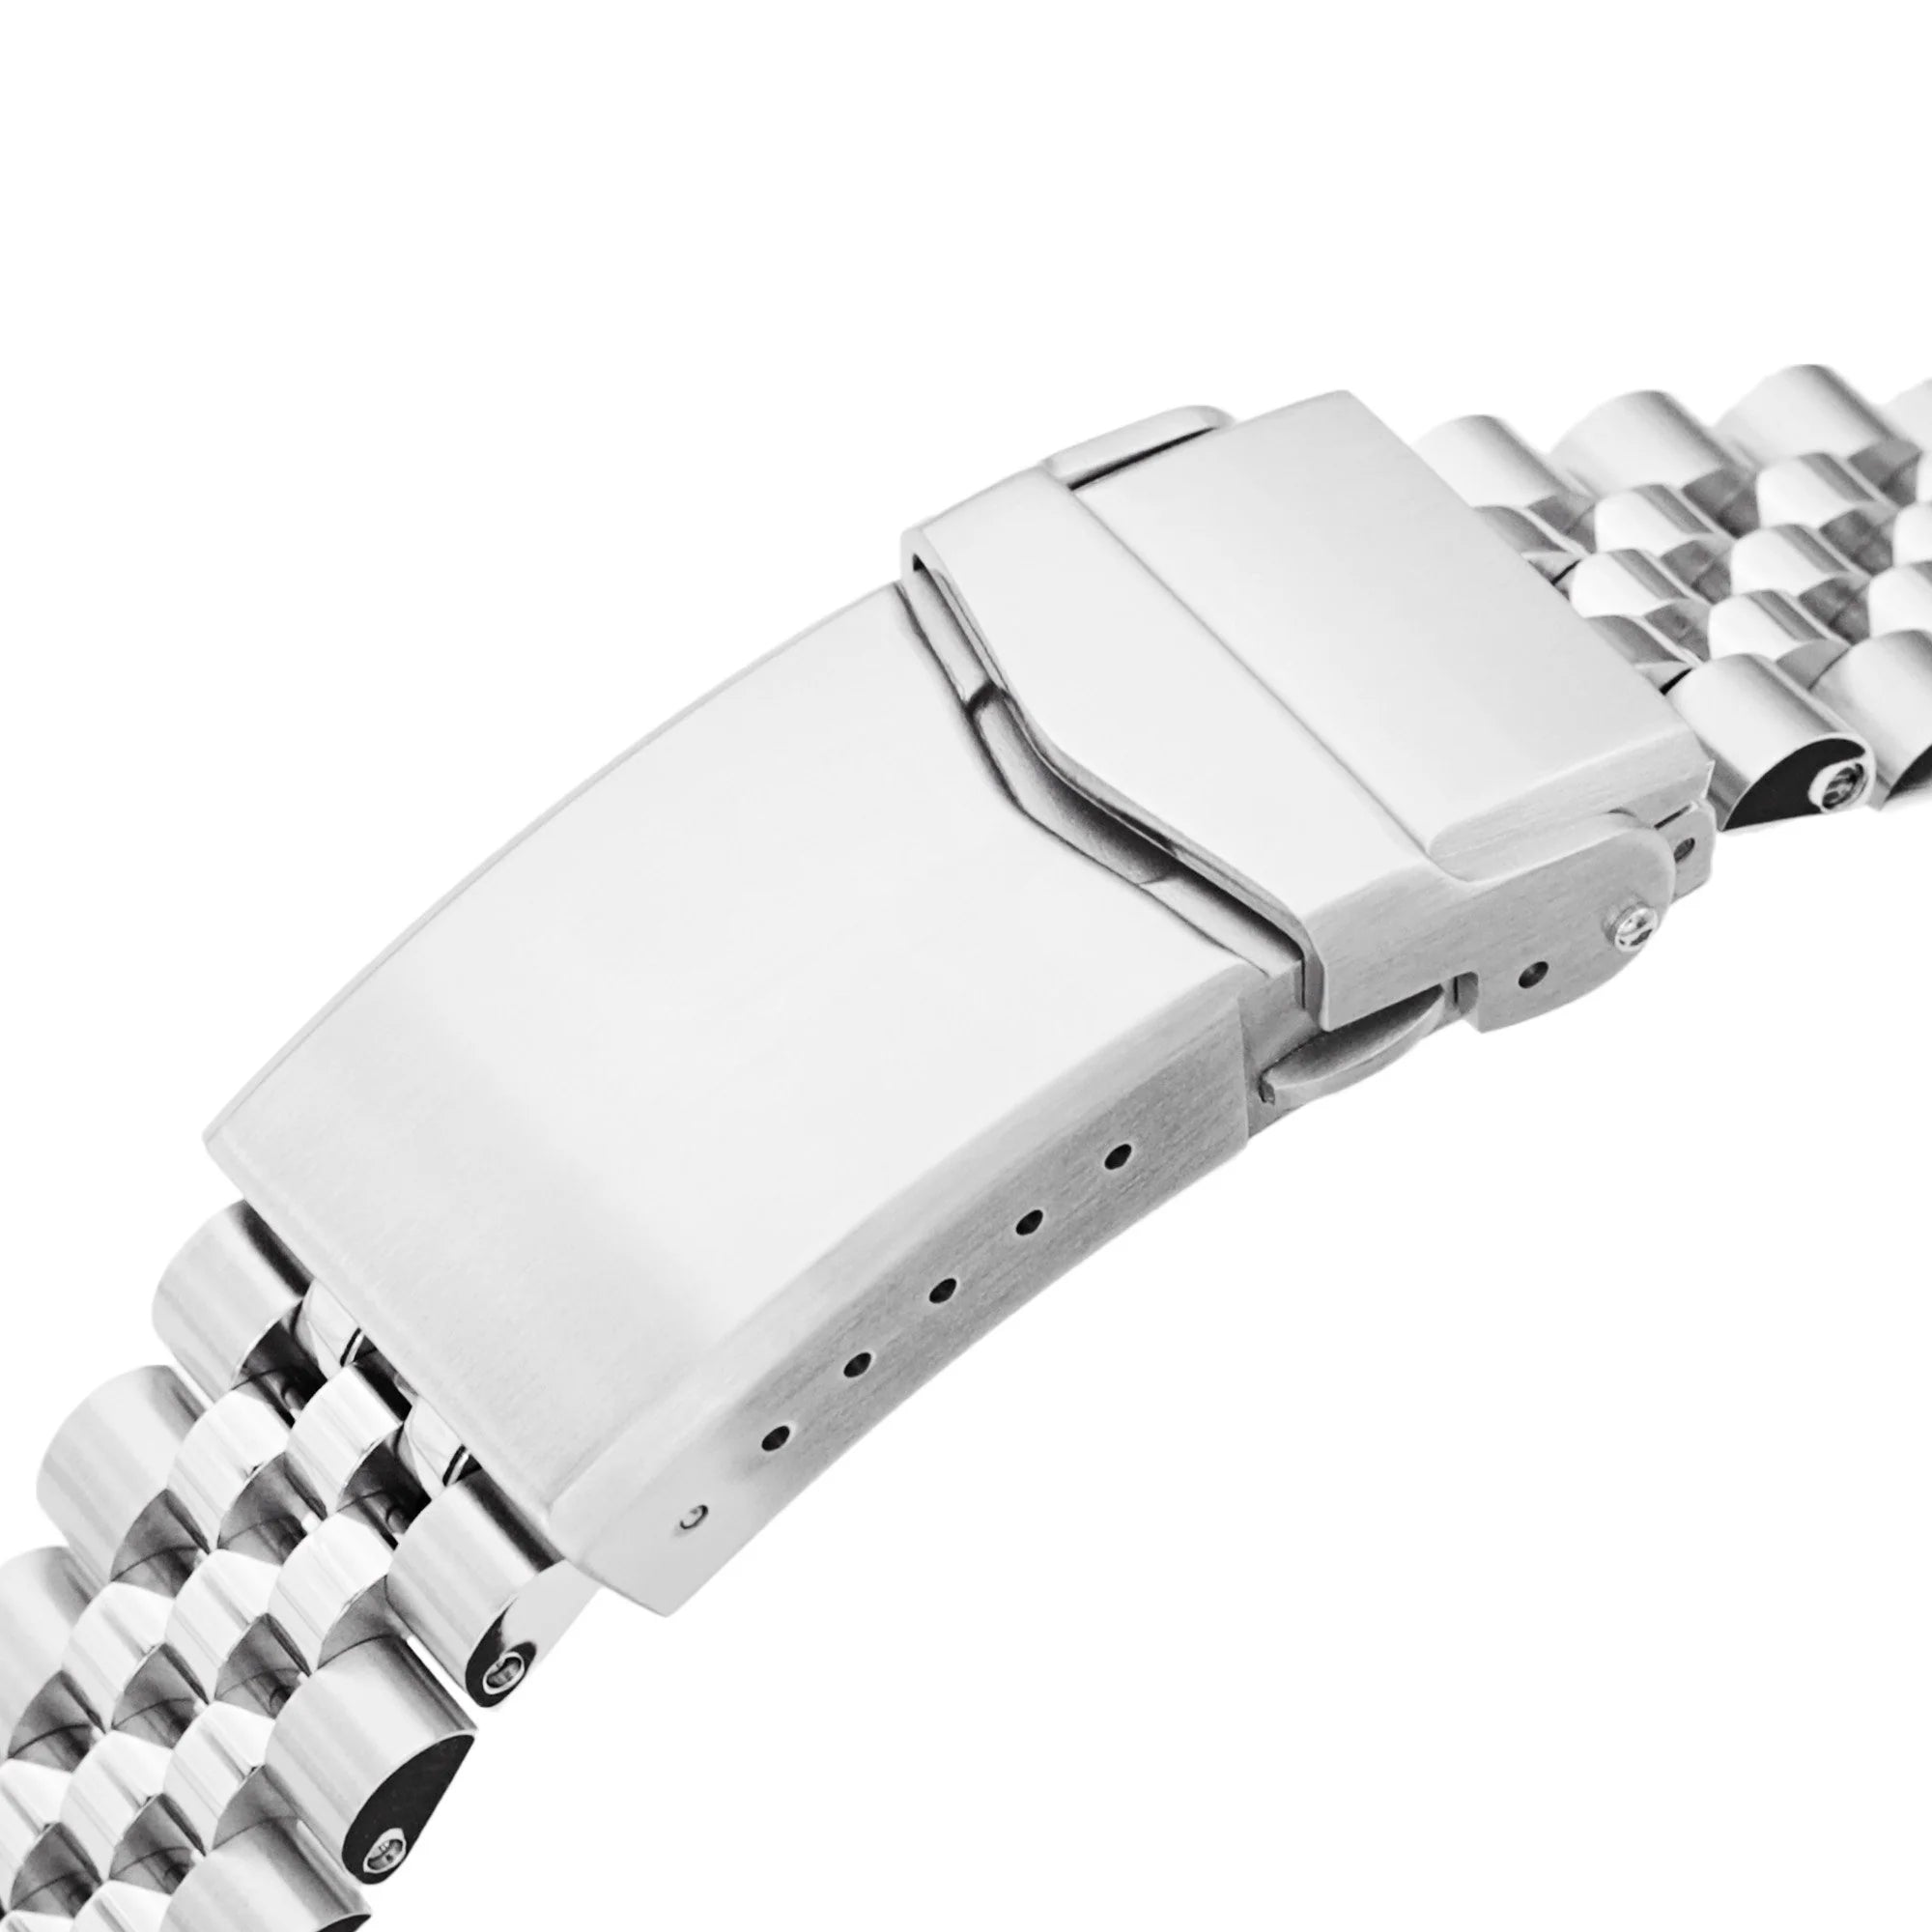 [STRAPCODE] Super-Jub II Steel Bracelet with V-Clasp